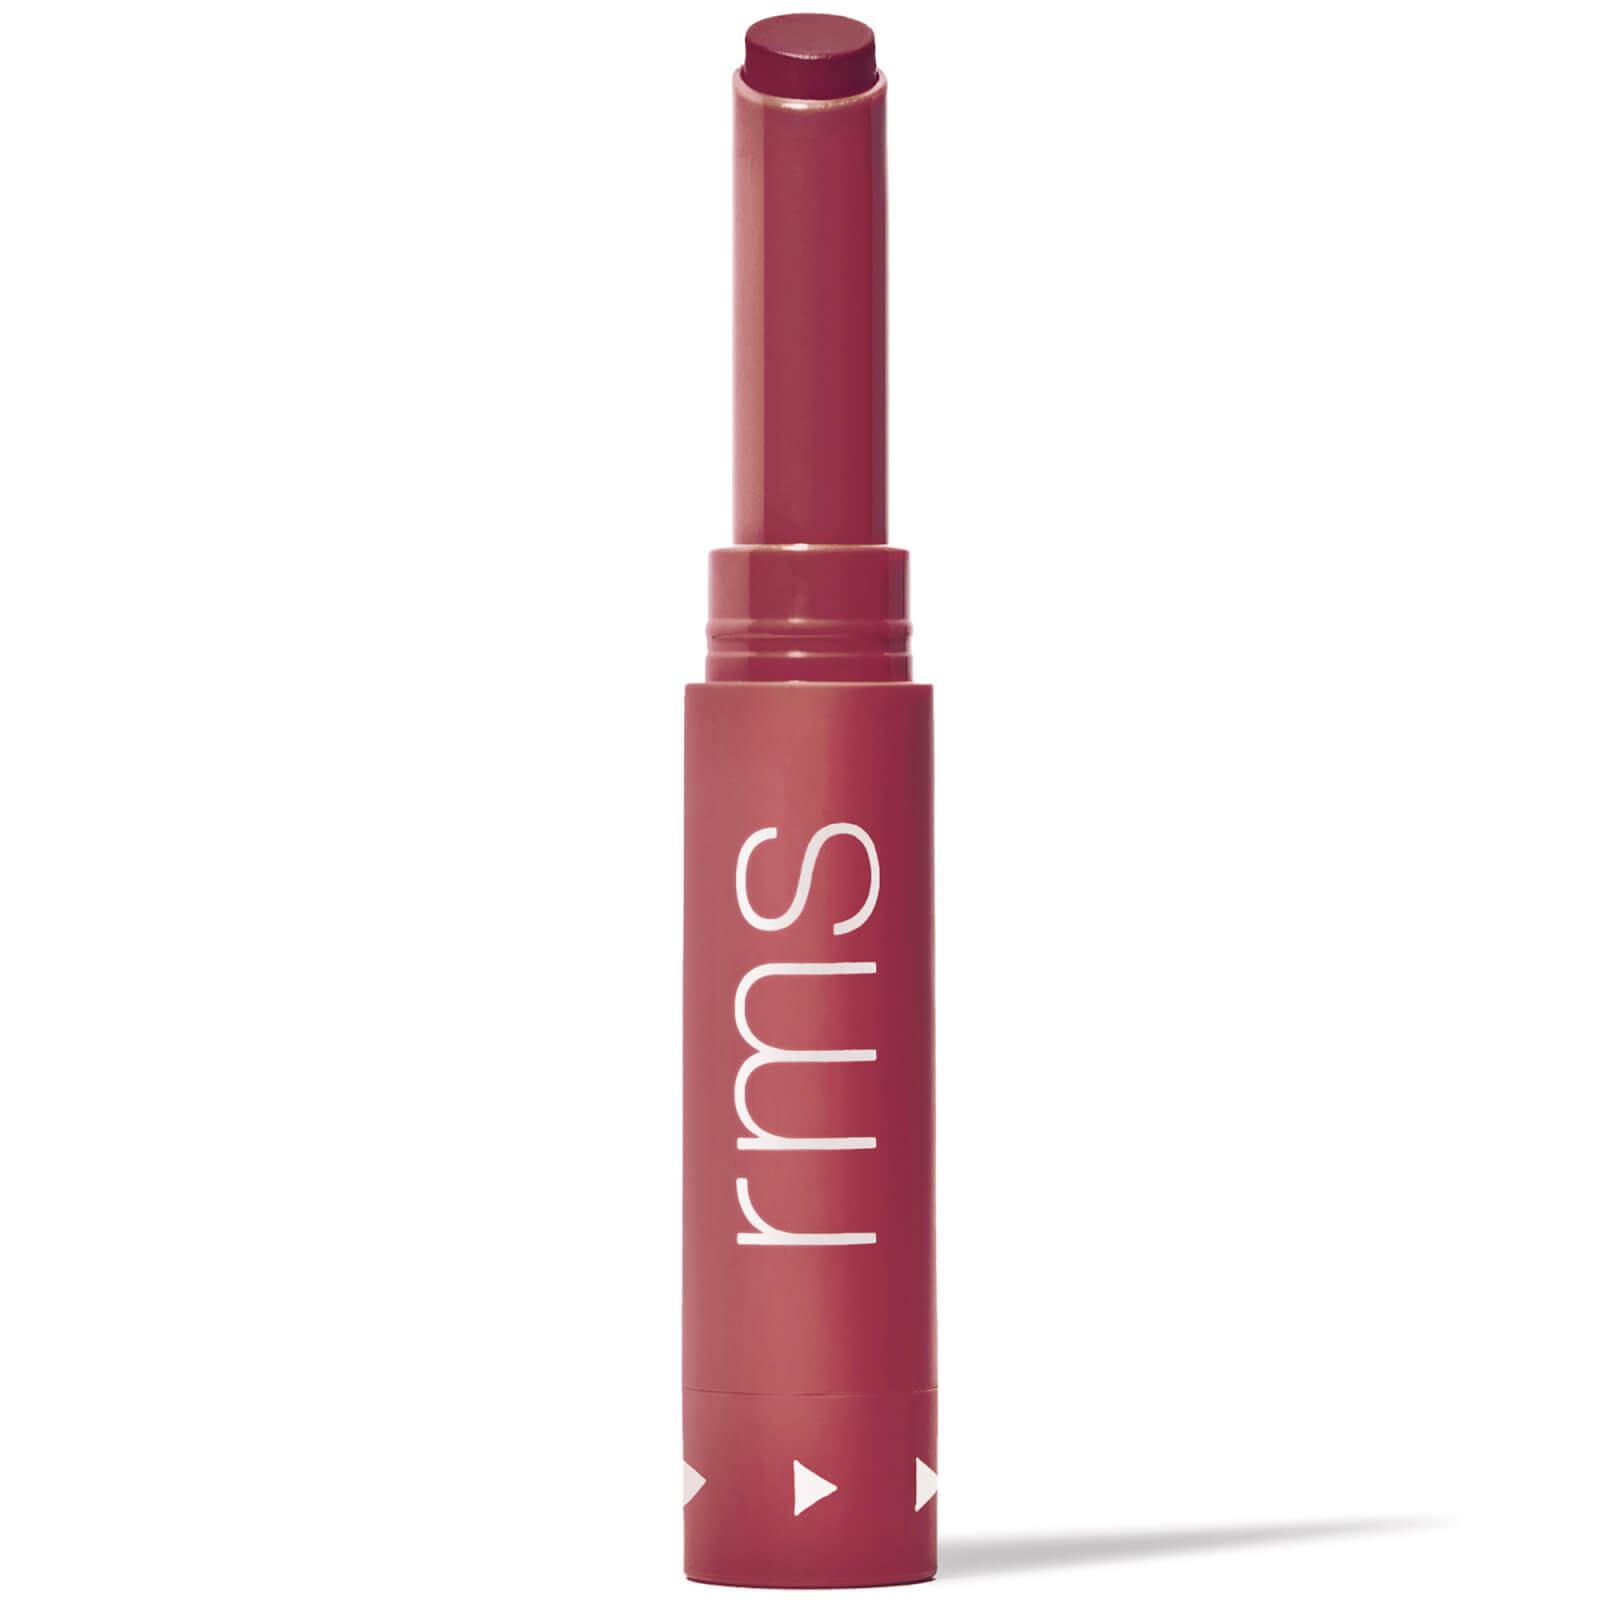 Rms Beauty Legendary Serum Lipstick 21g (various Shades) In Miranda